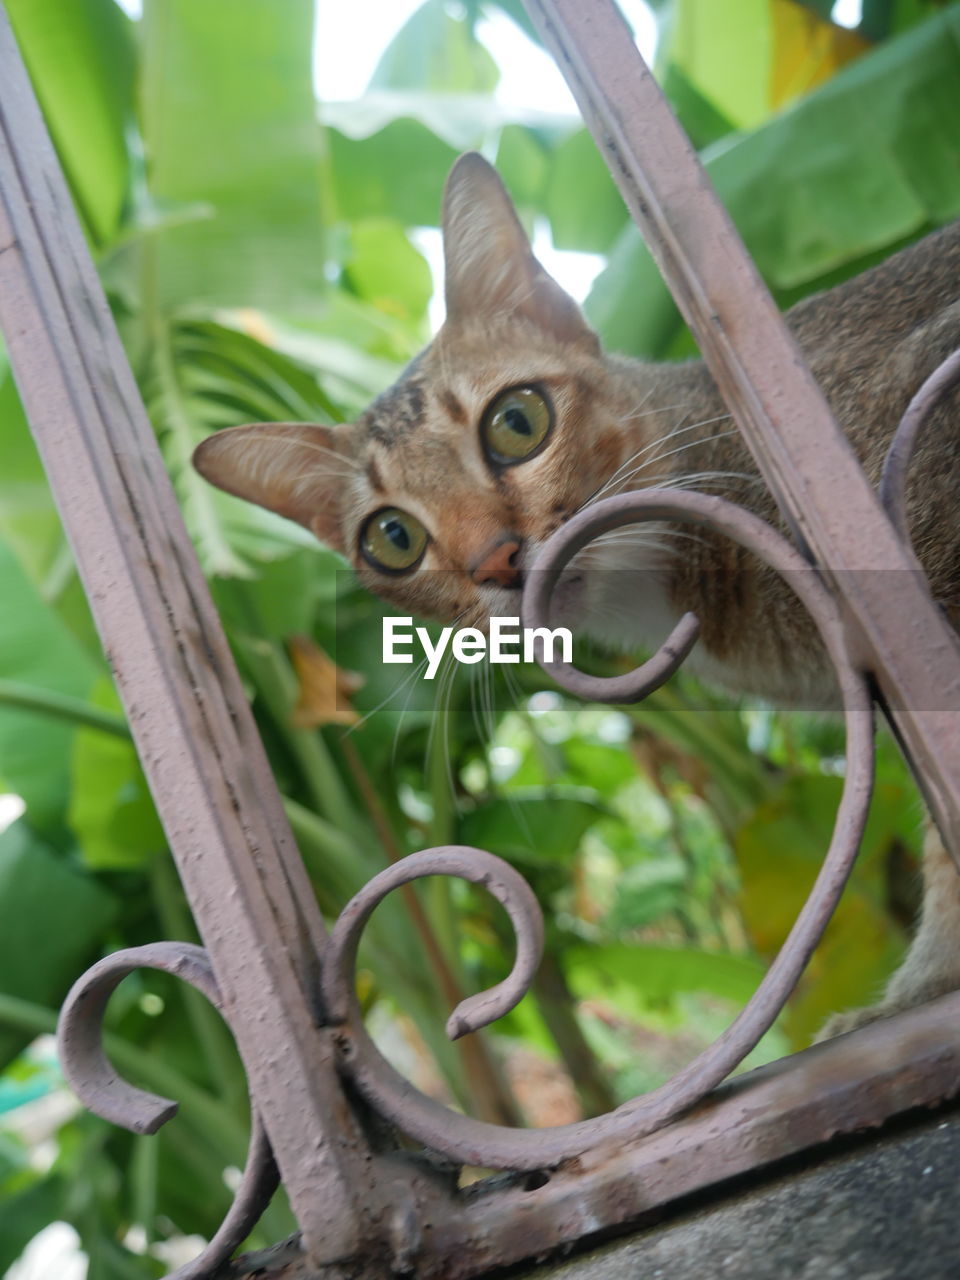 CLOSE-UP PORTRAIT OF A CAT ON PLANT